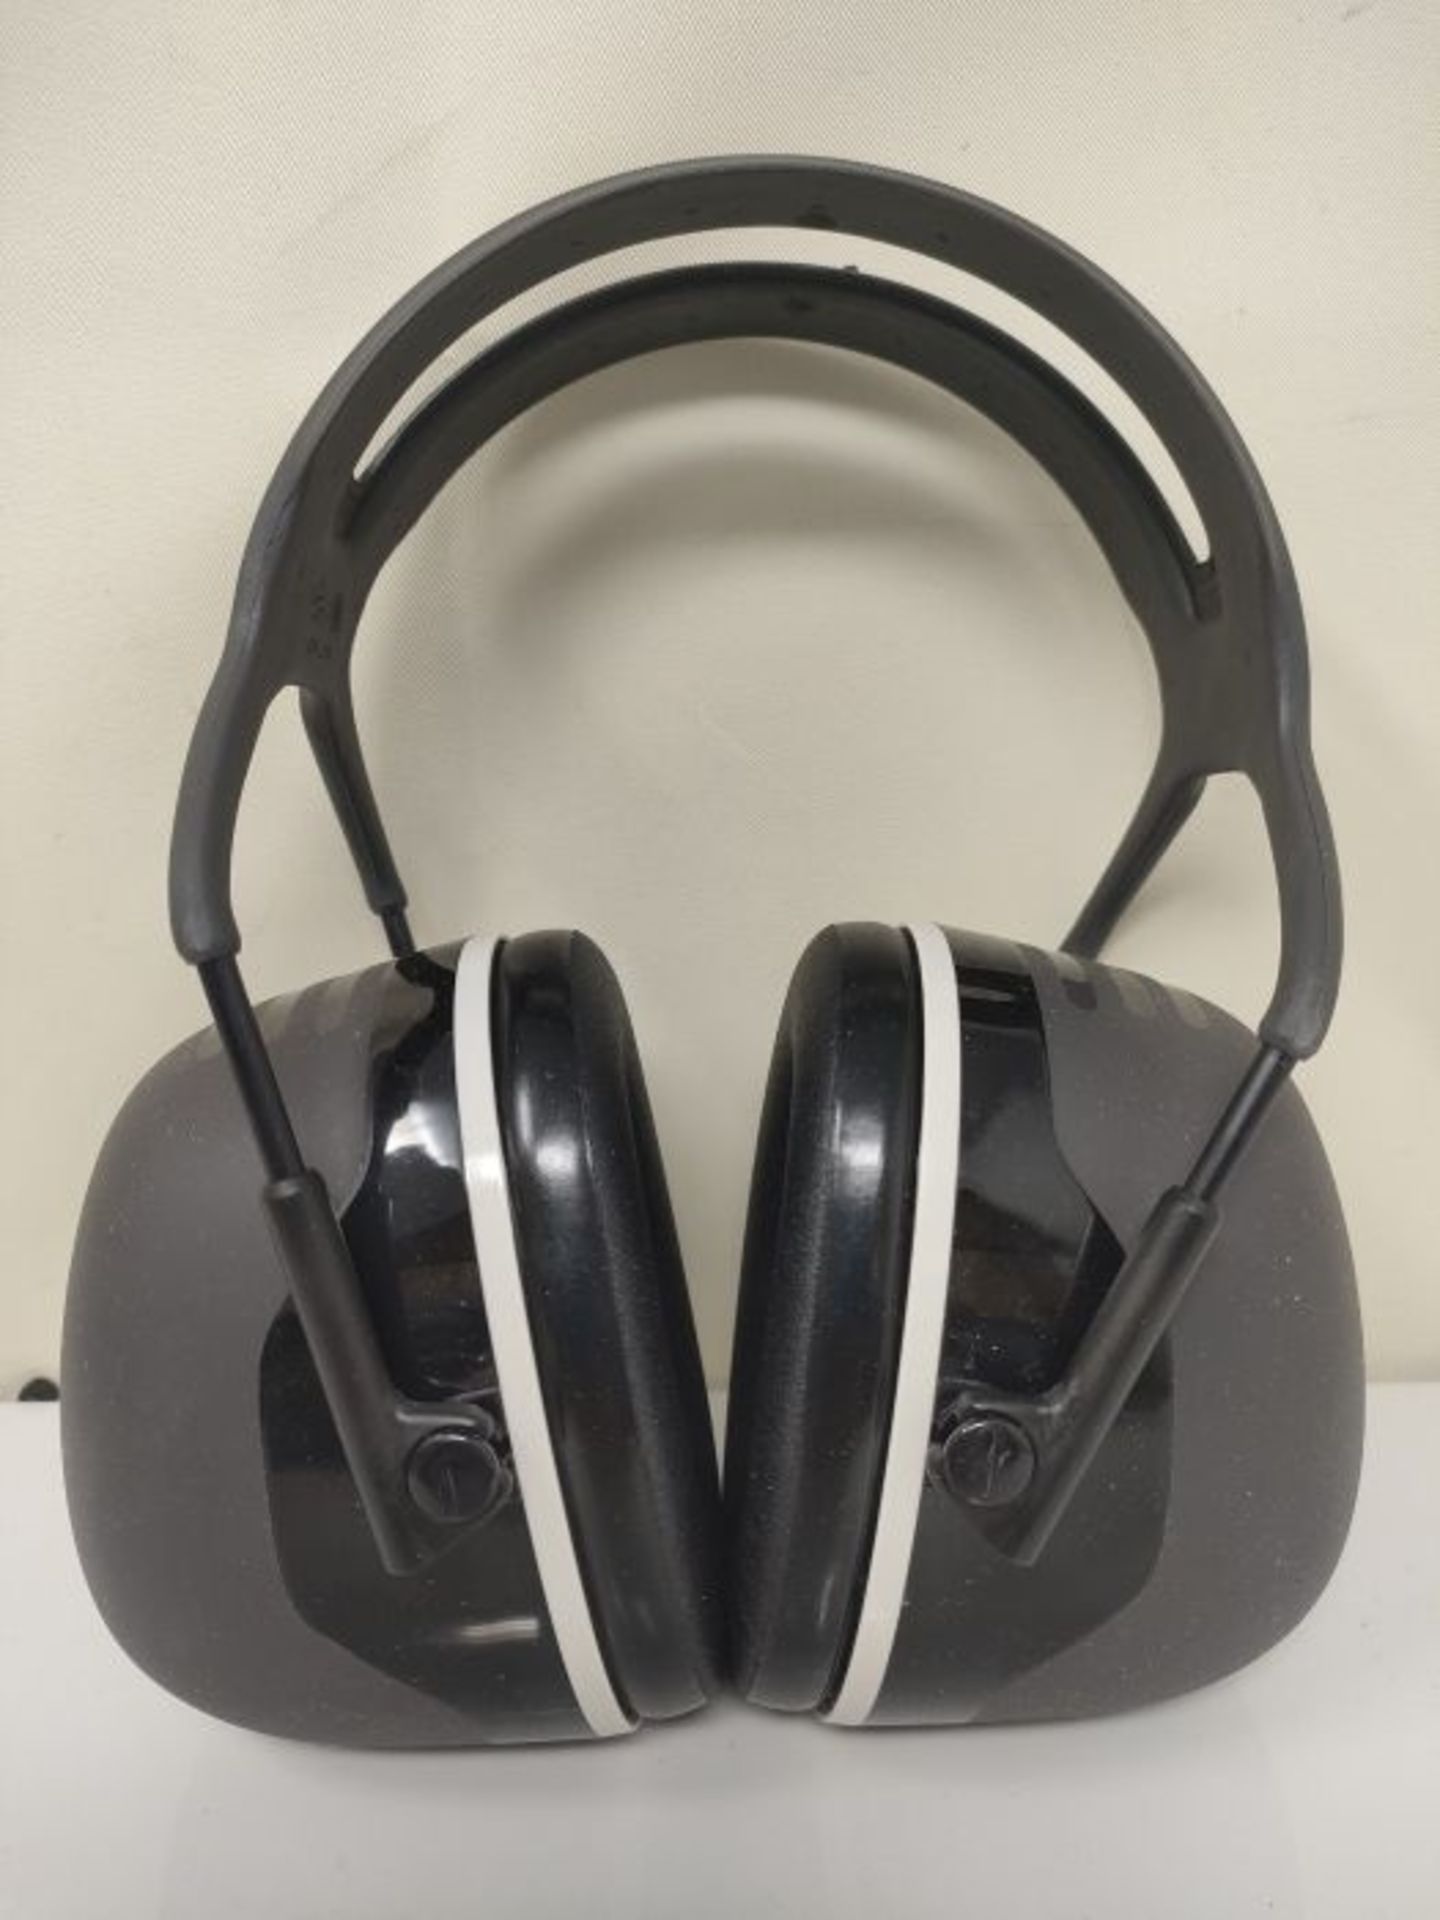 3M PELTOR X5A Ear Defenders Headband, Black - Image 2 of 3